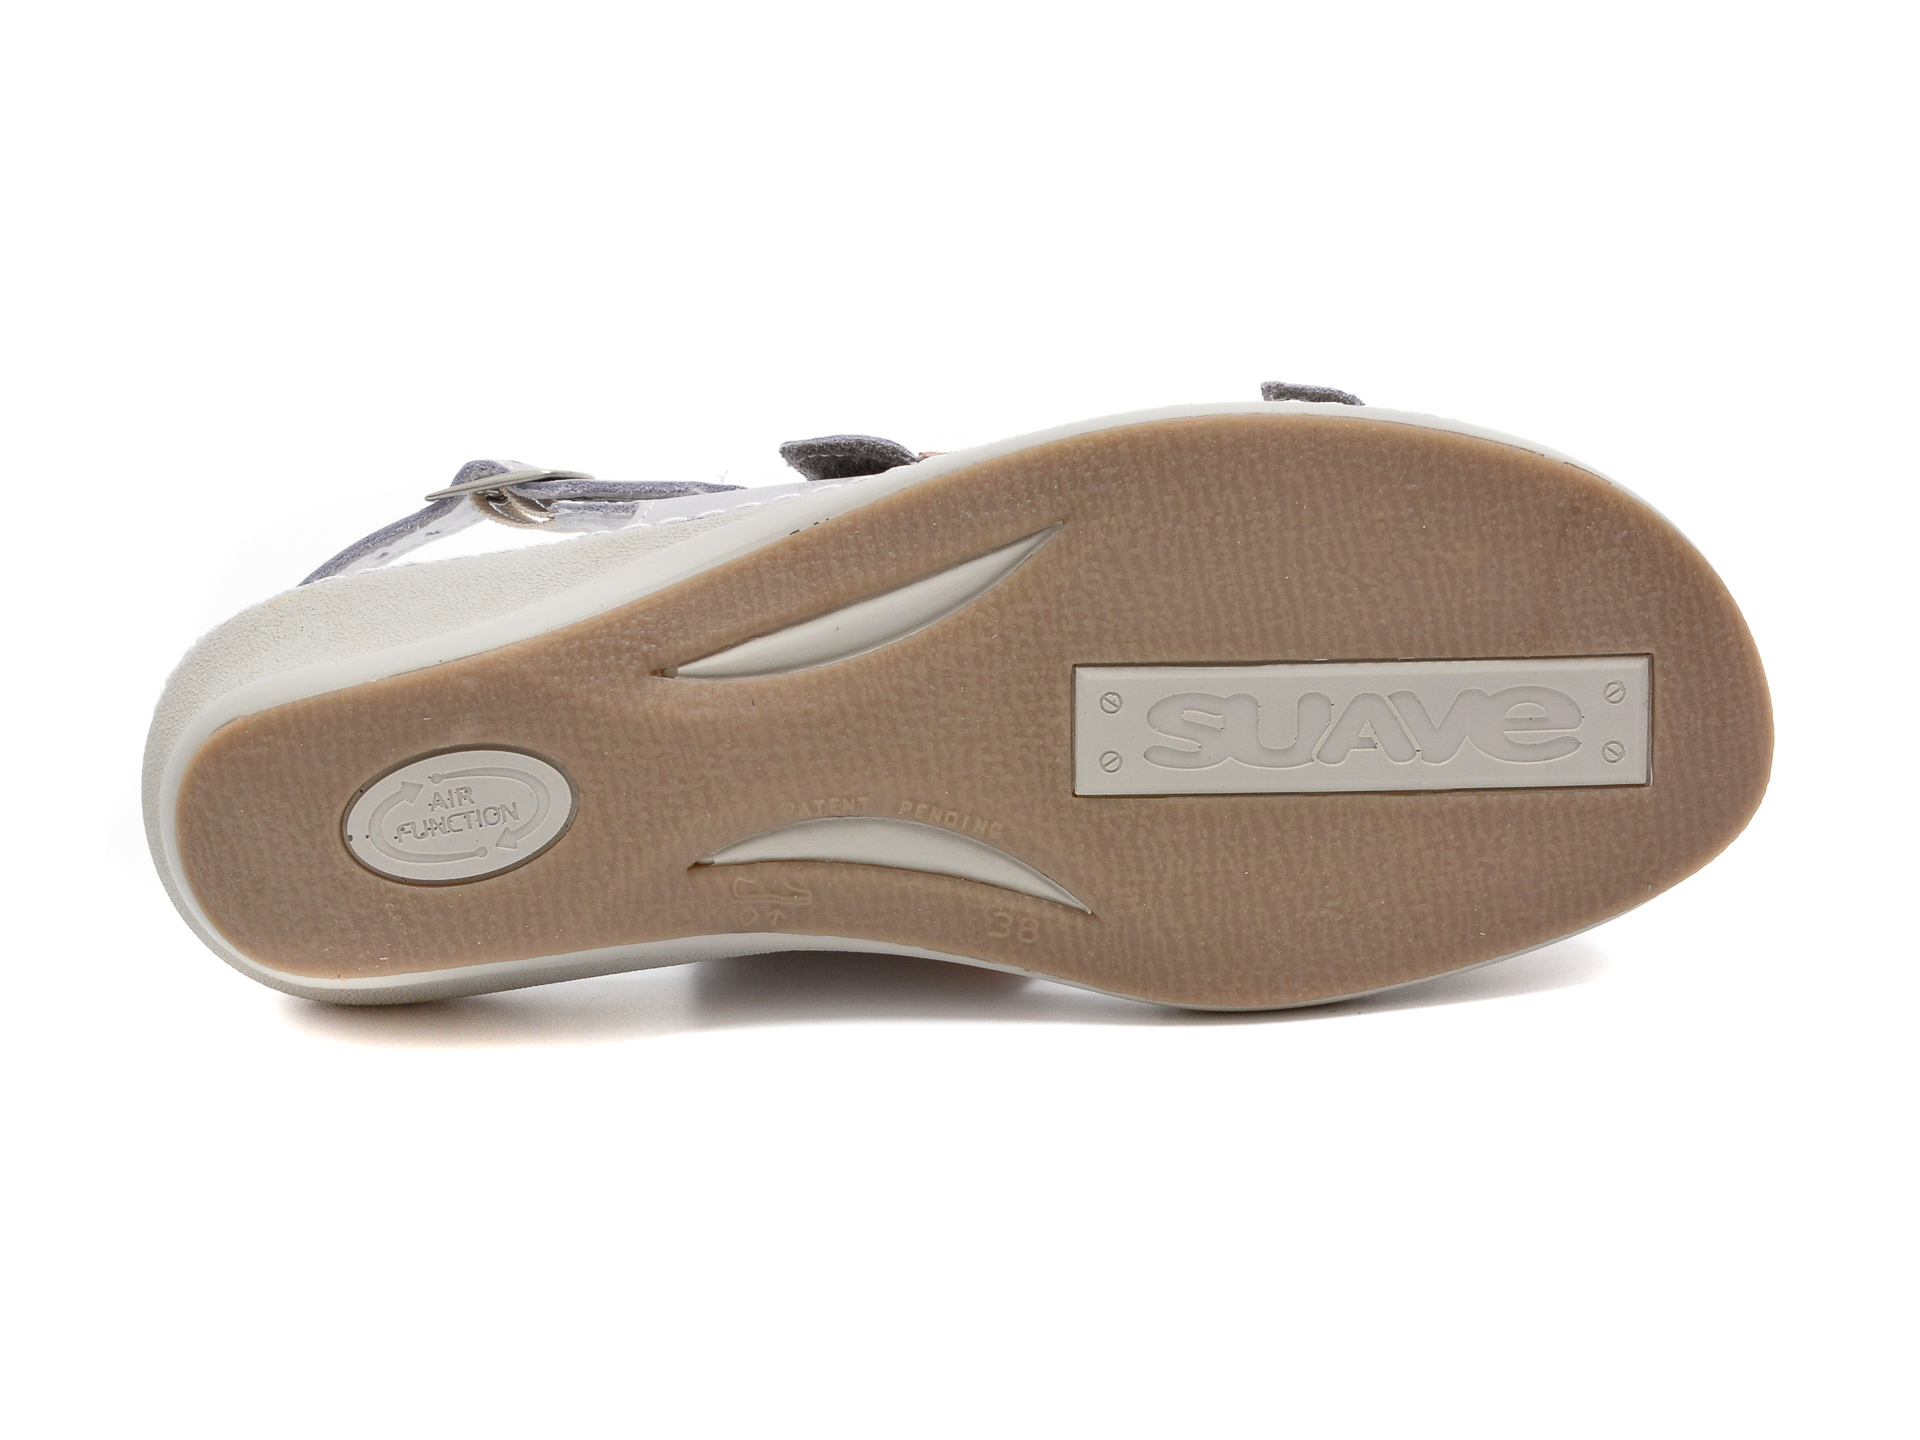 Poze Sandale SUAVE mov, 934, din piele naturala otter.ro